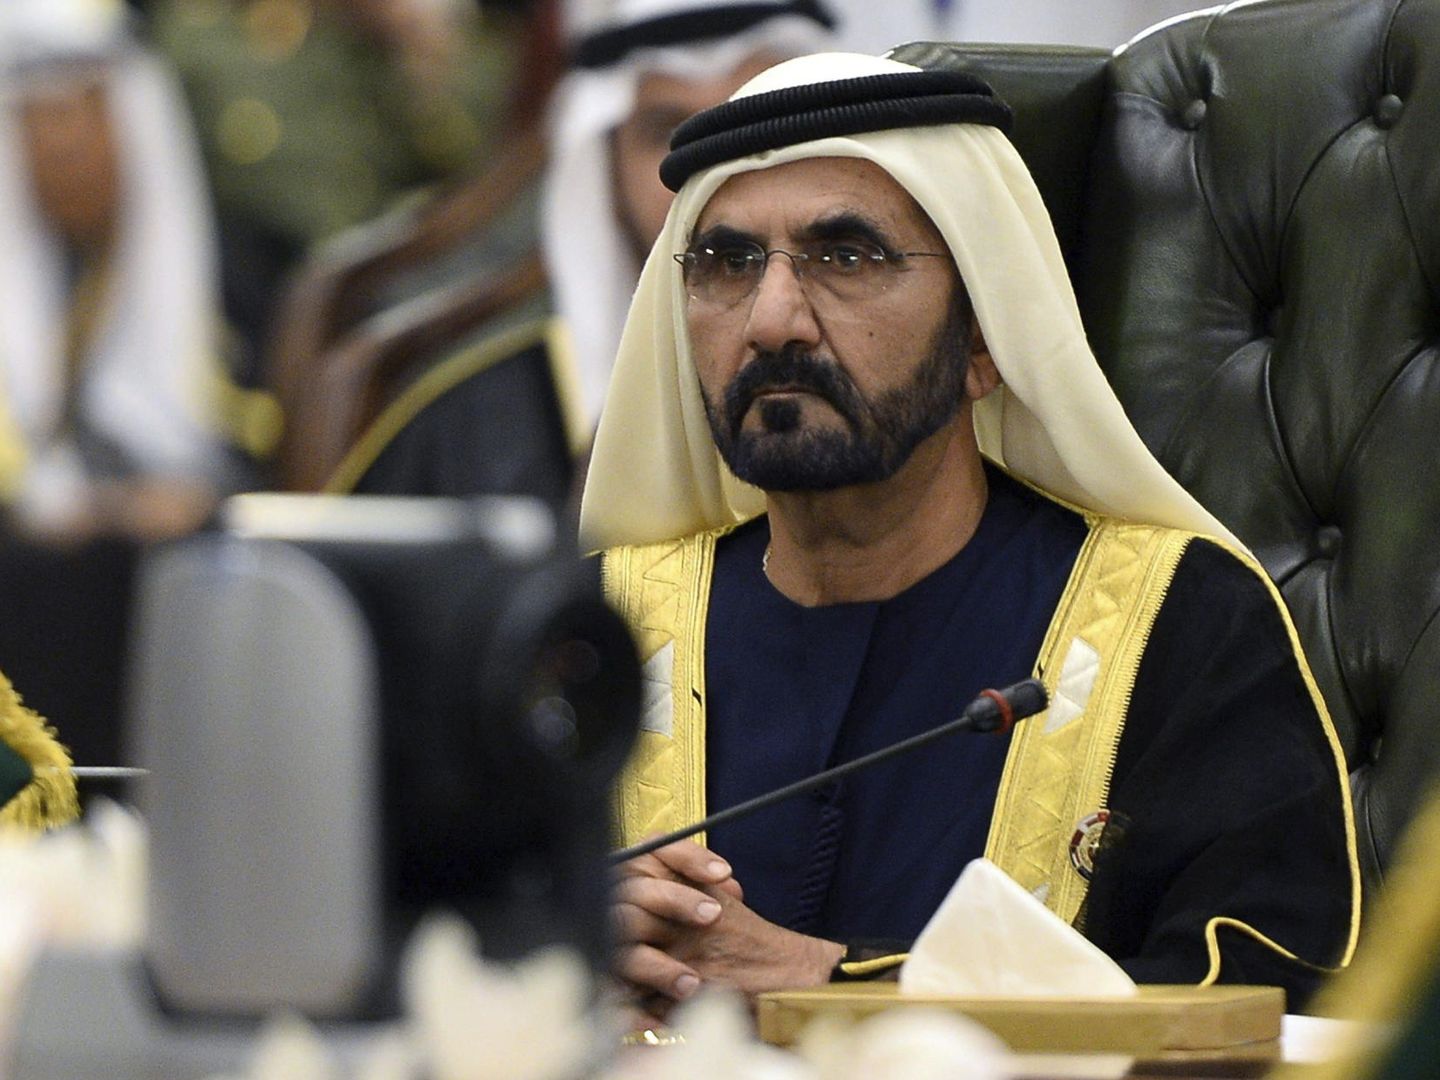 El emir de Dubái, Mohamed bin Rashid al Maktum, en una imagen de archivo. (EFE)